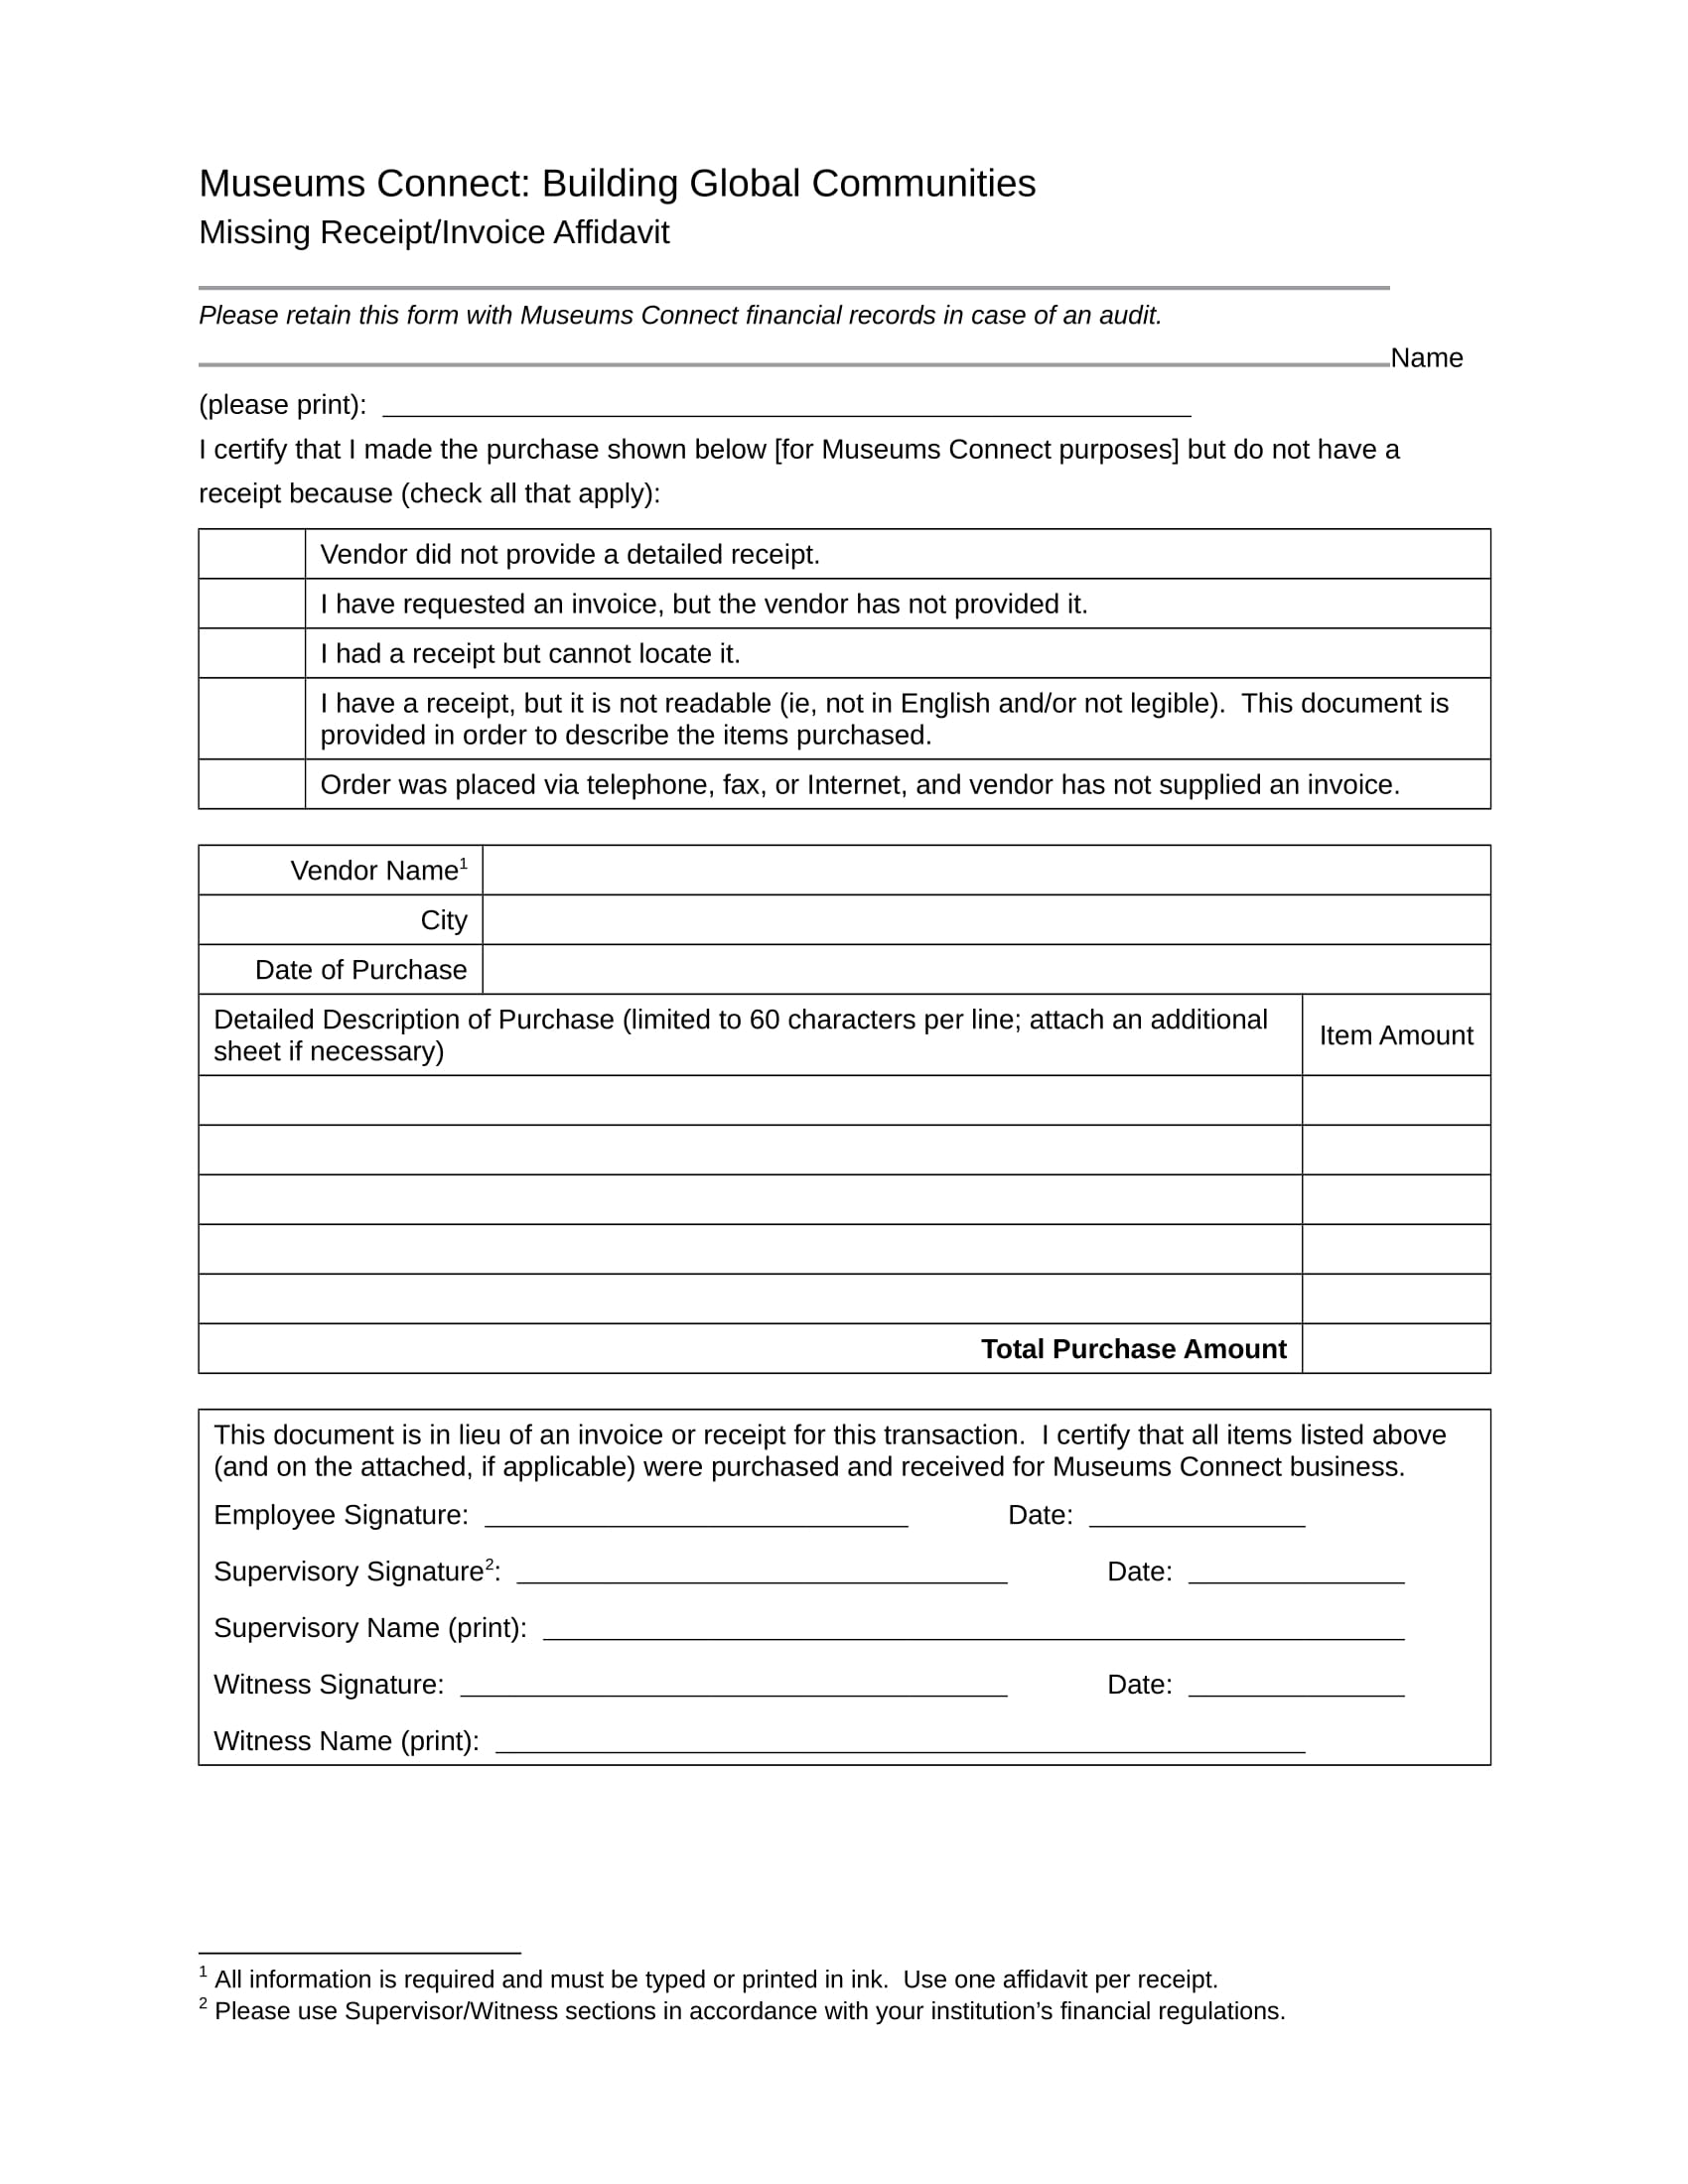 invoice affidavit sample format 1